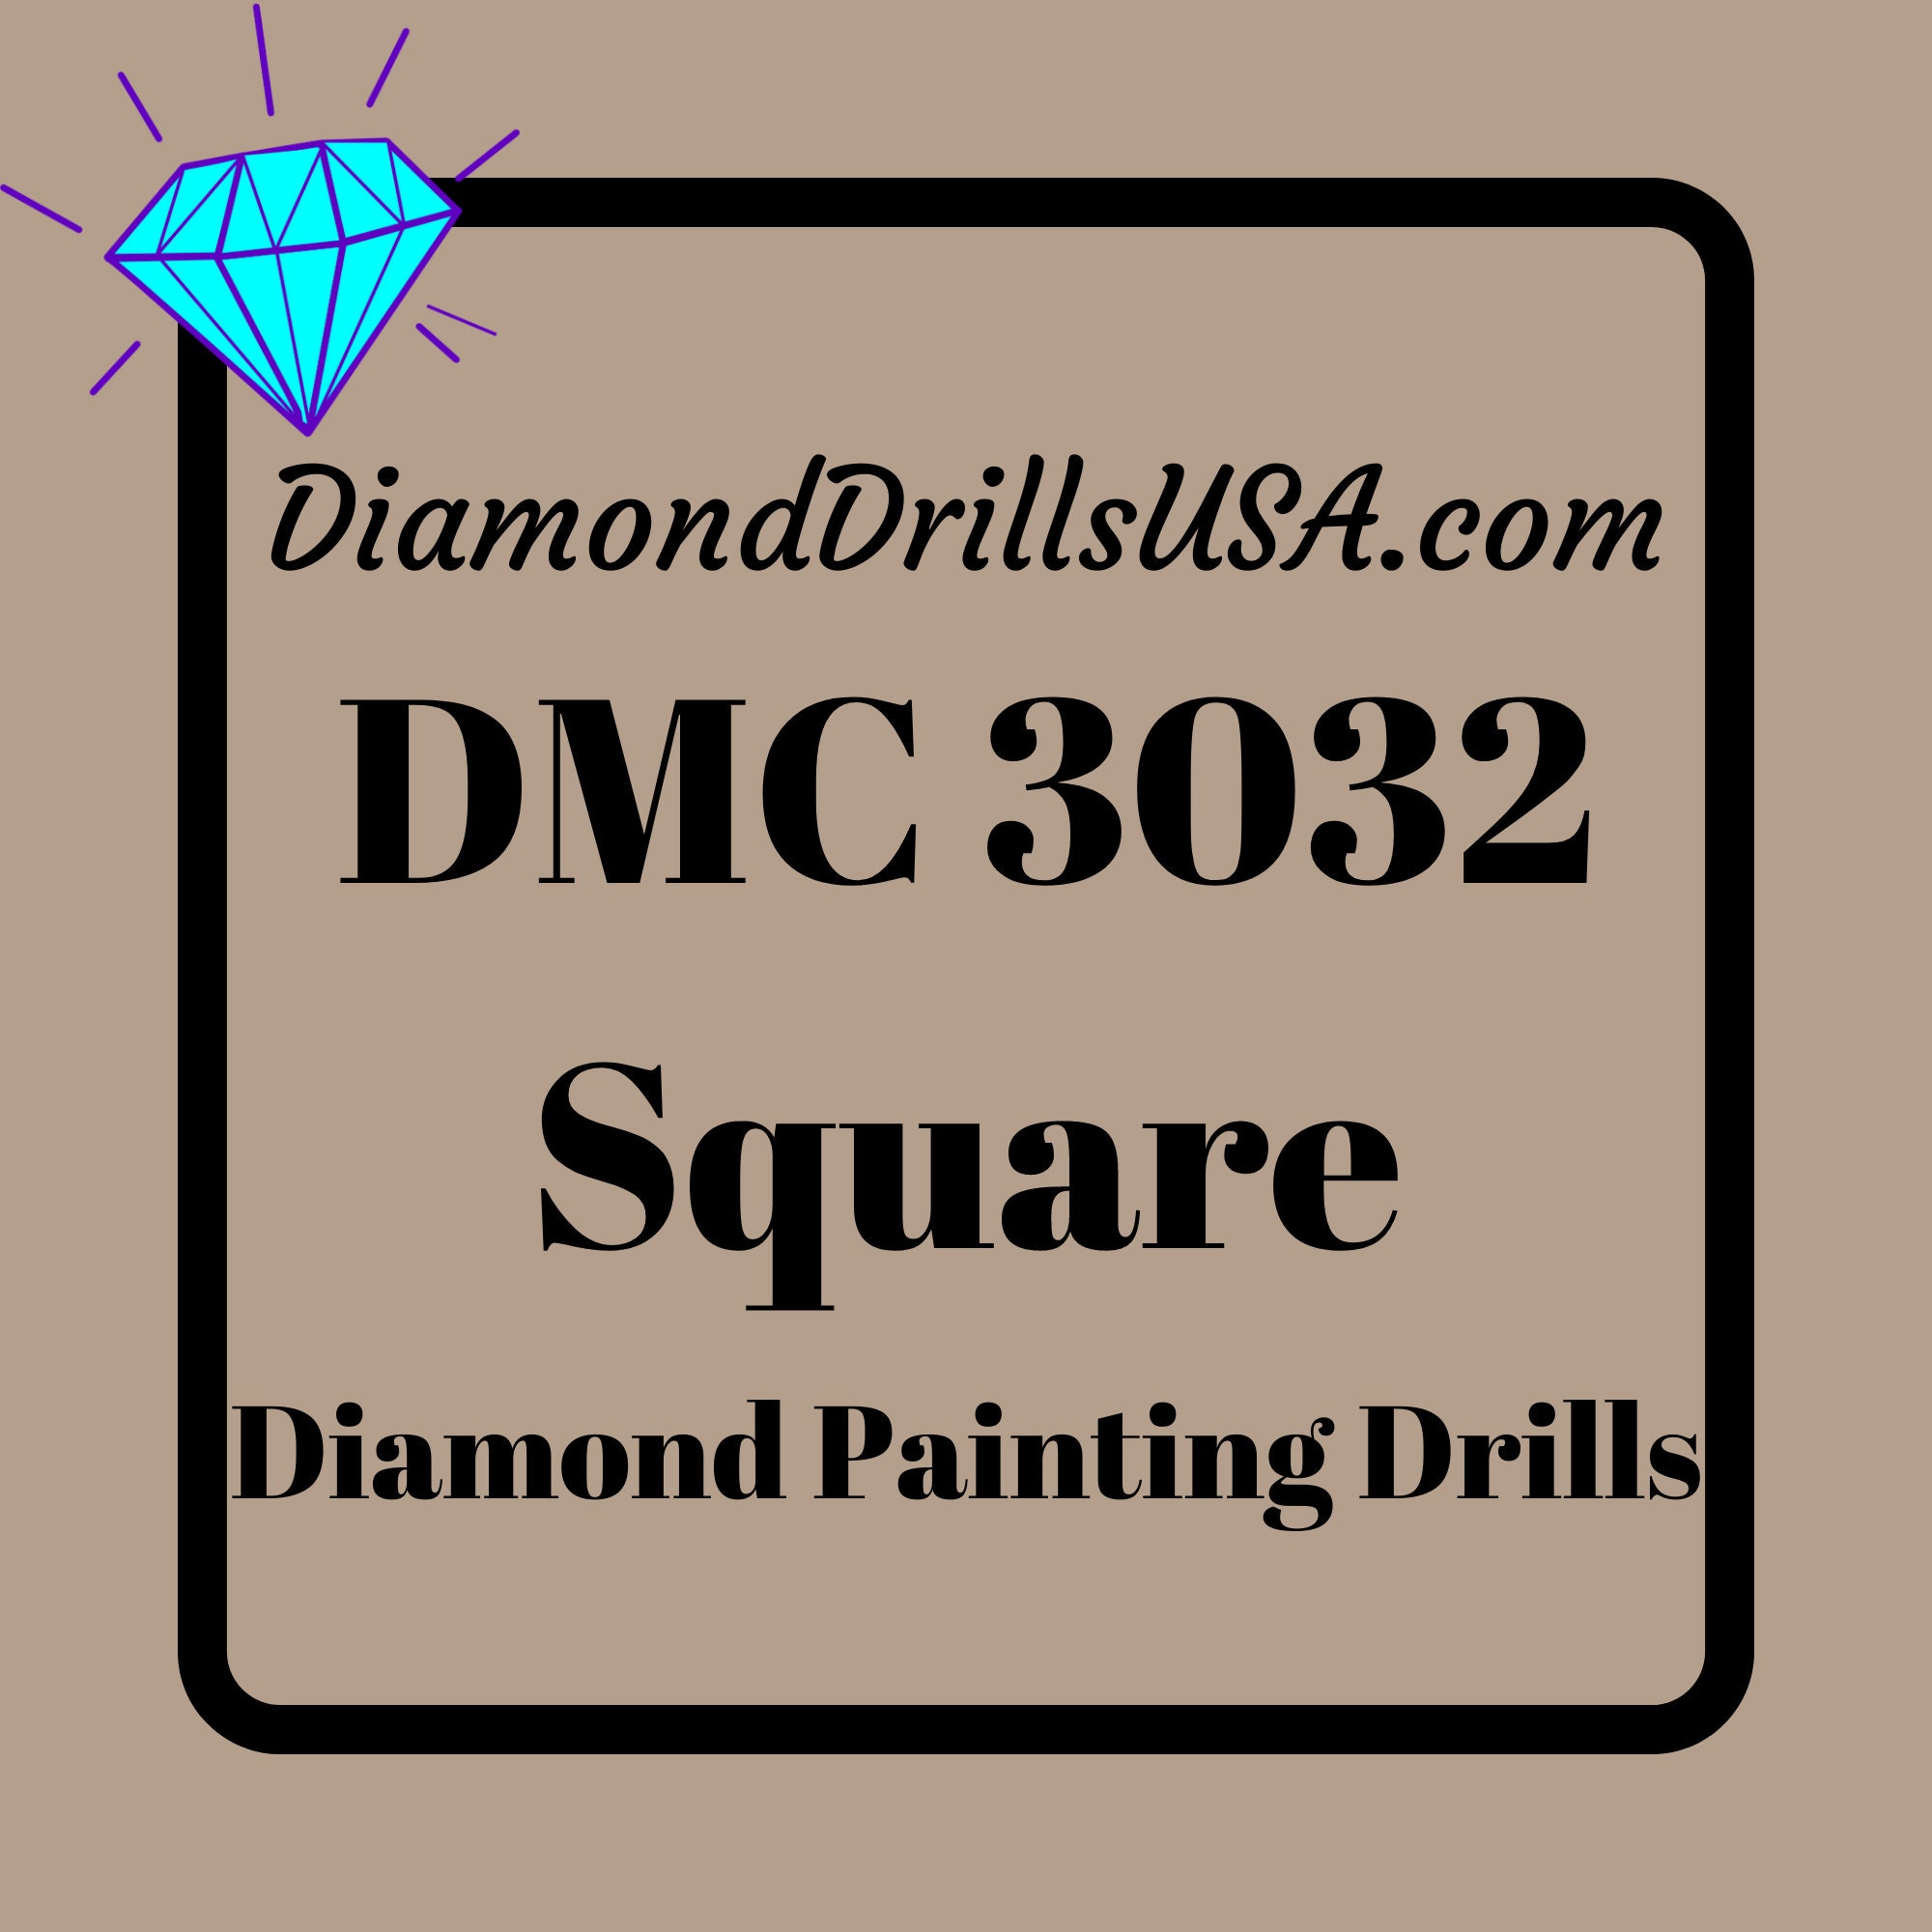 DiamondDrillsUSA - Large White Drill Tray for Diamond Painting